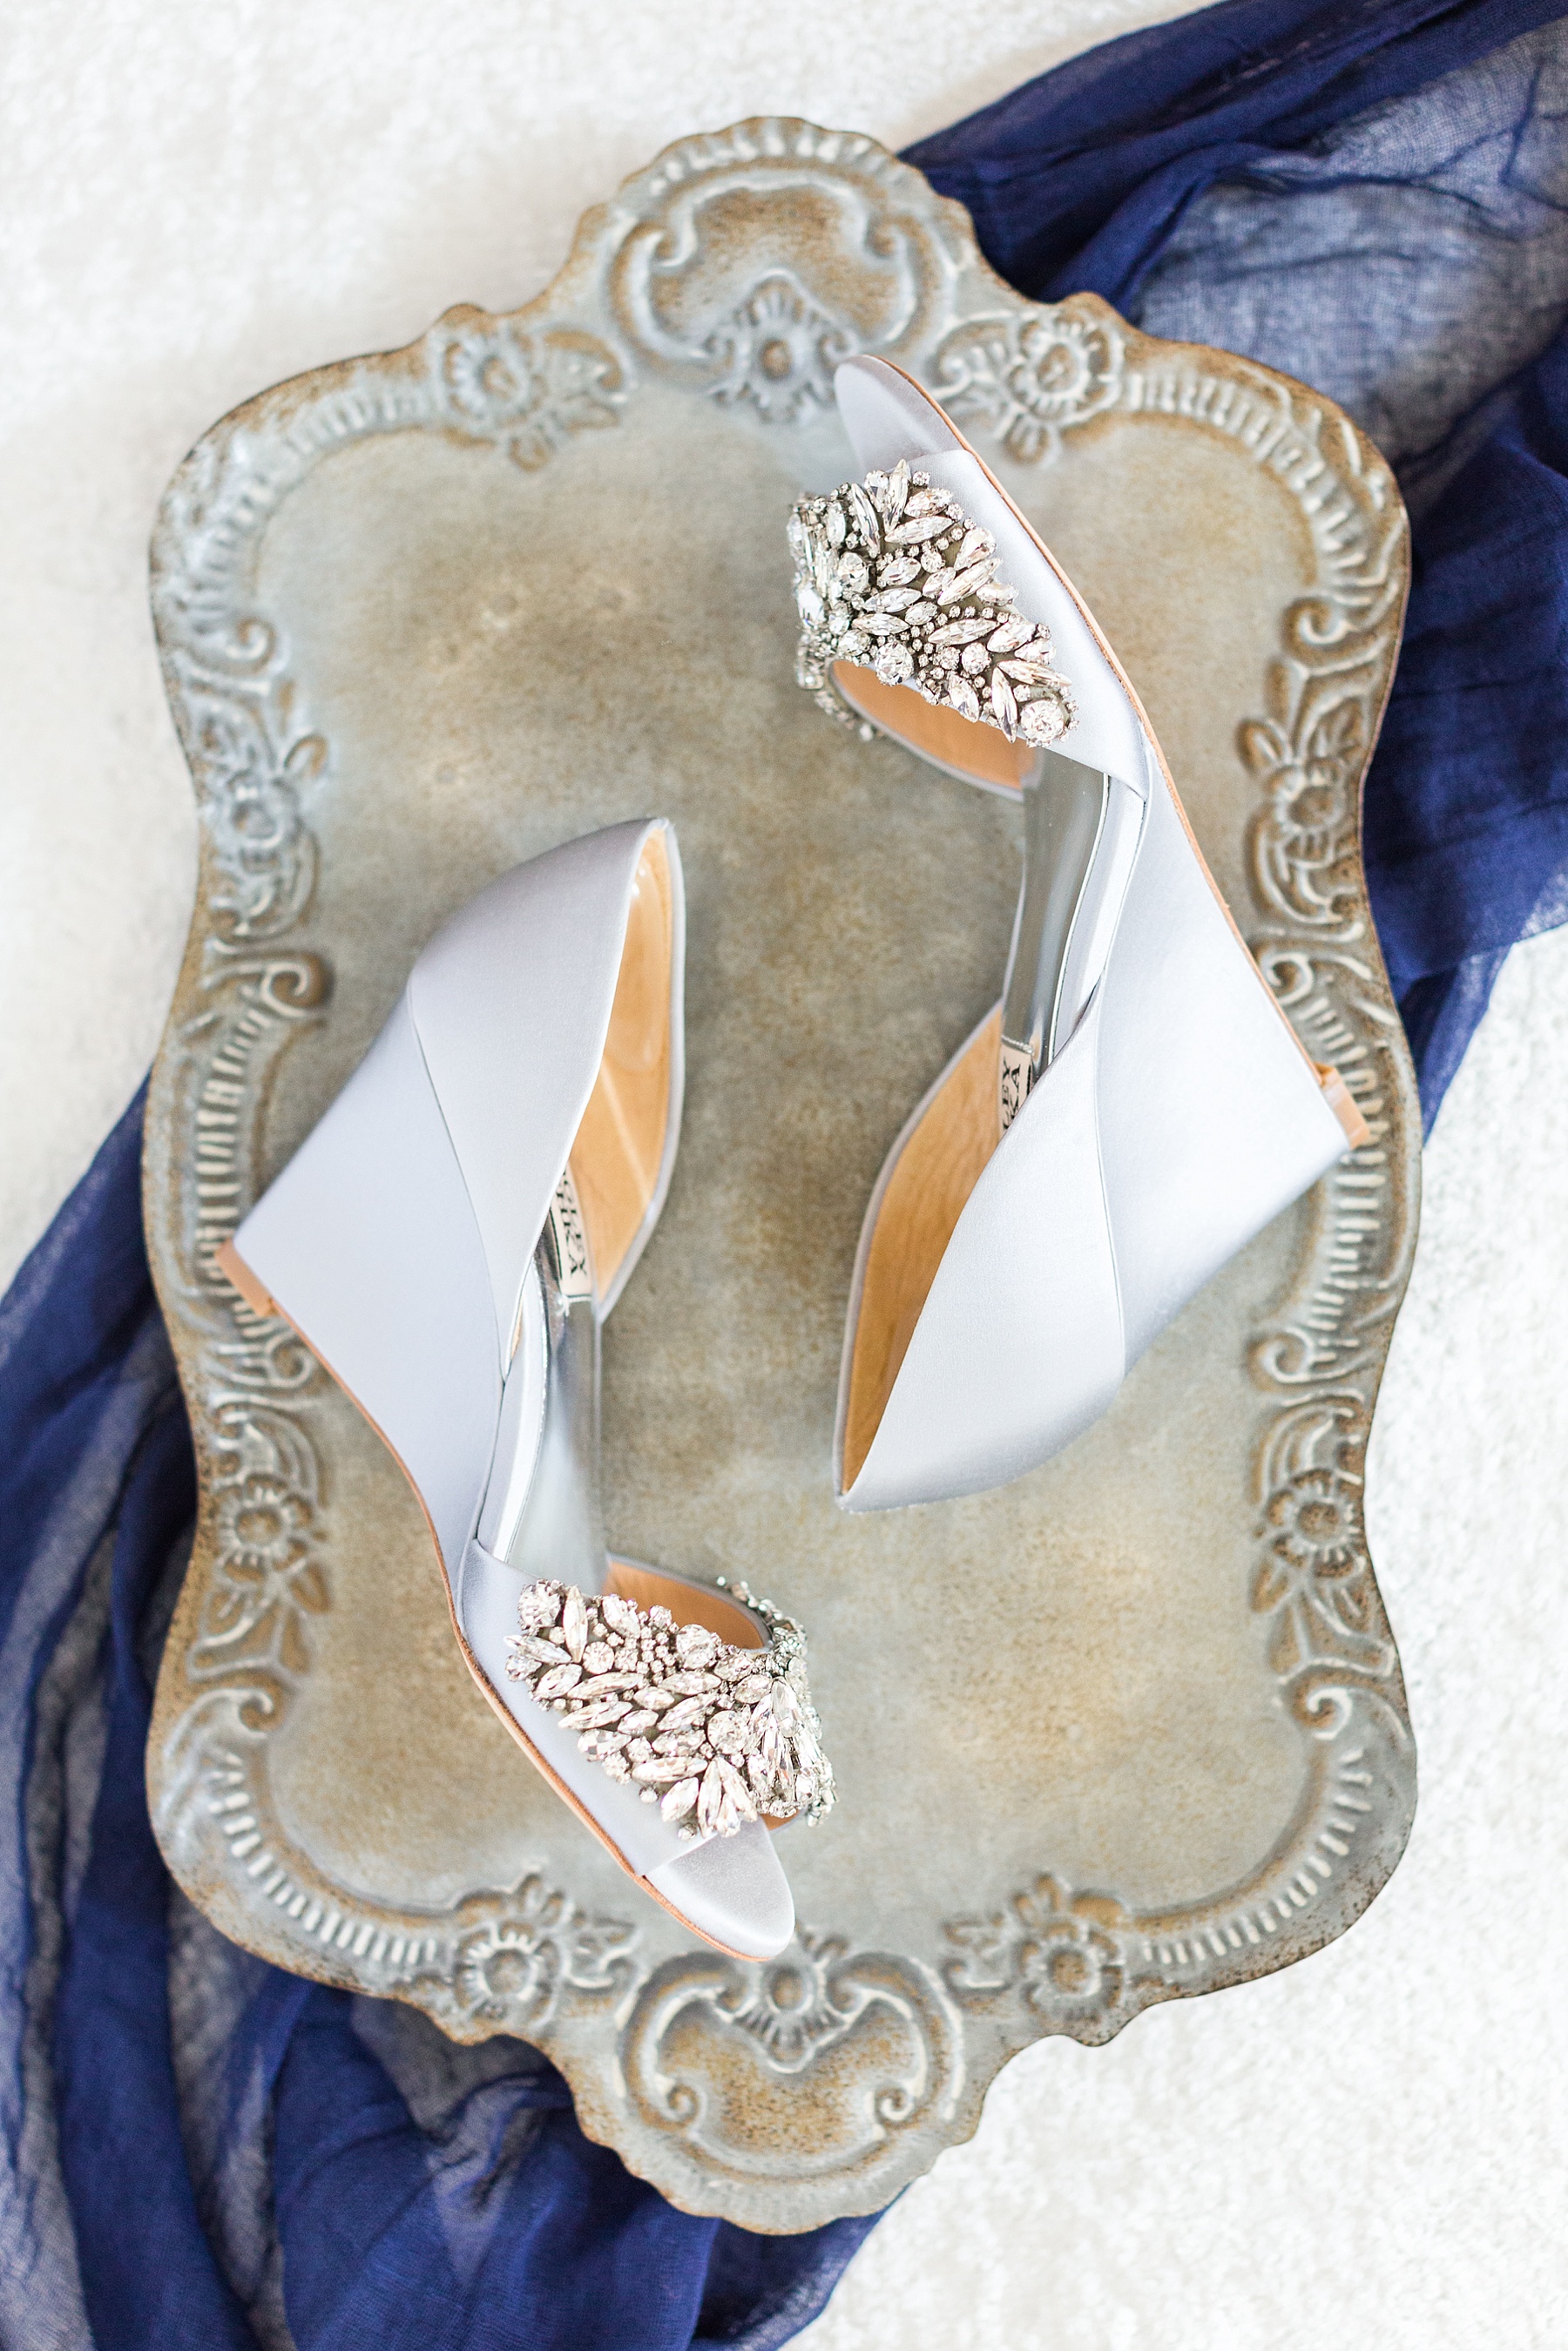 bride's dusty blue shoes by Badgley Mischka by Alexandra Mandato Photography